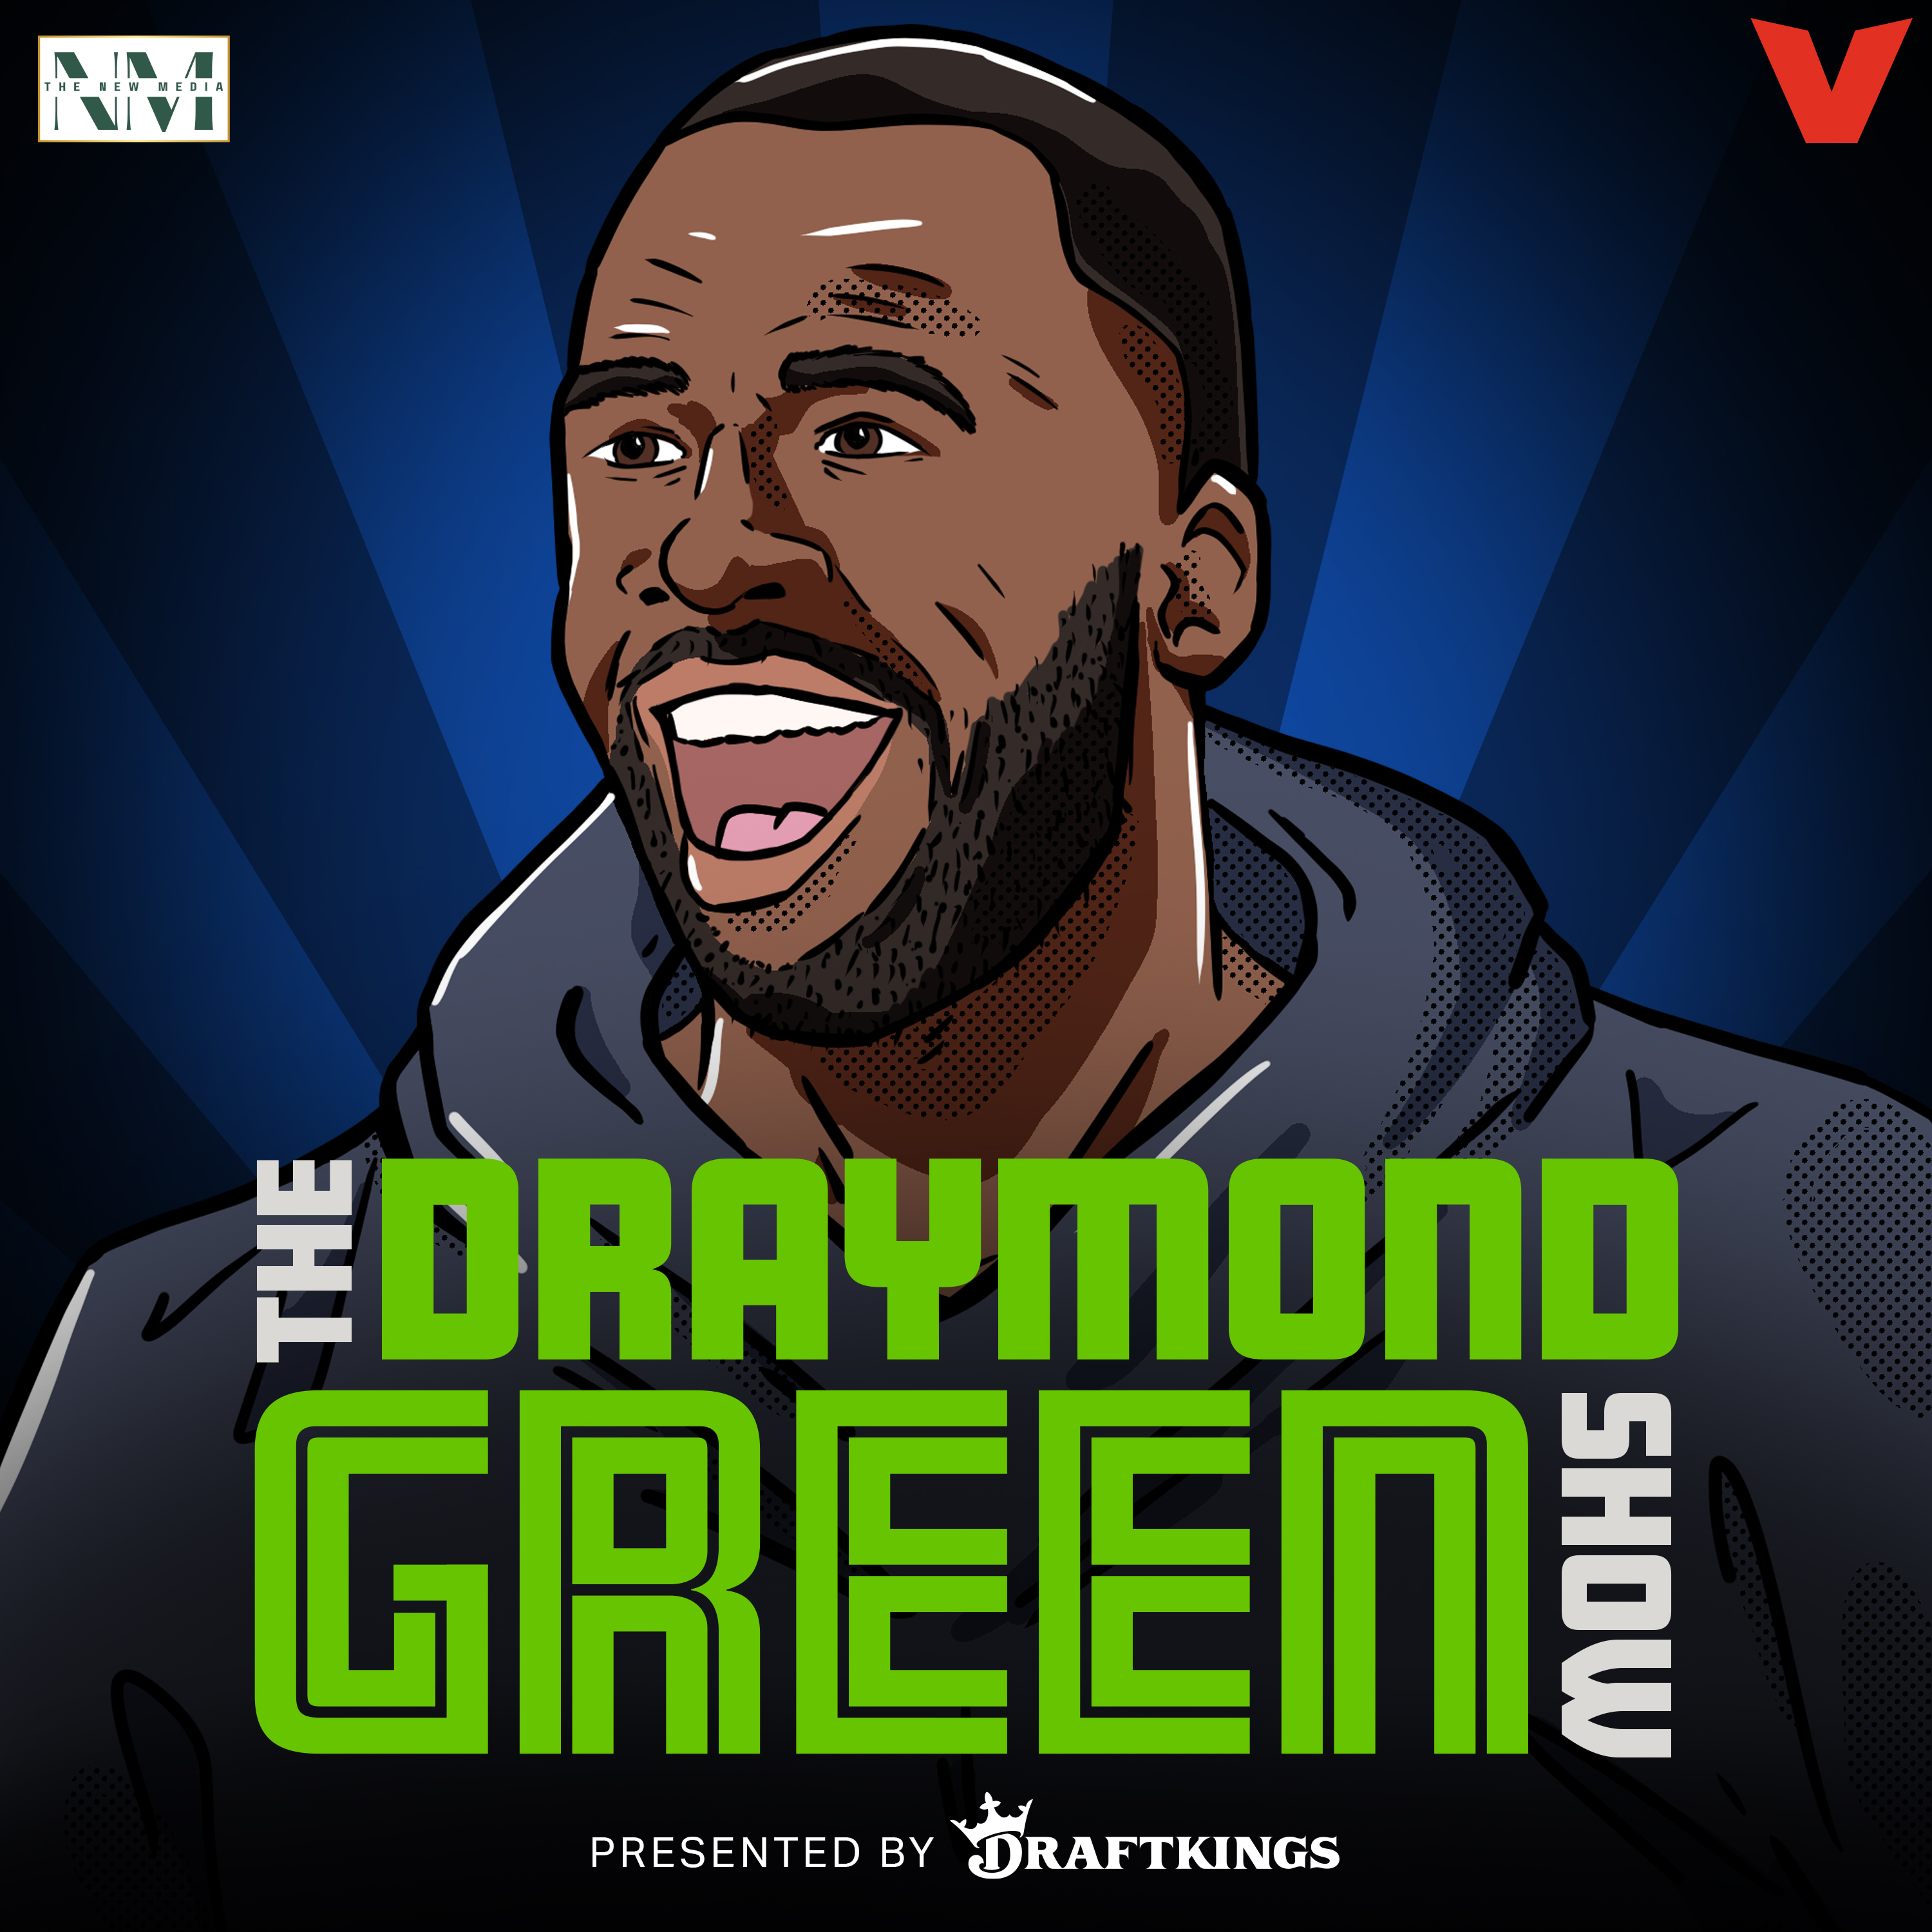 Draymond Green Show - Warriors Season Over, What's Next?